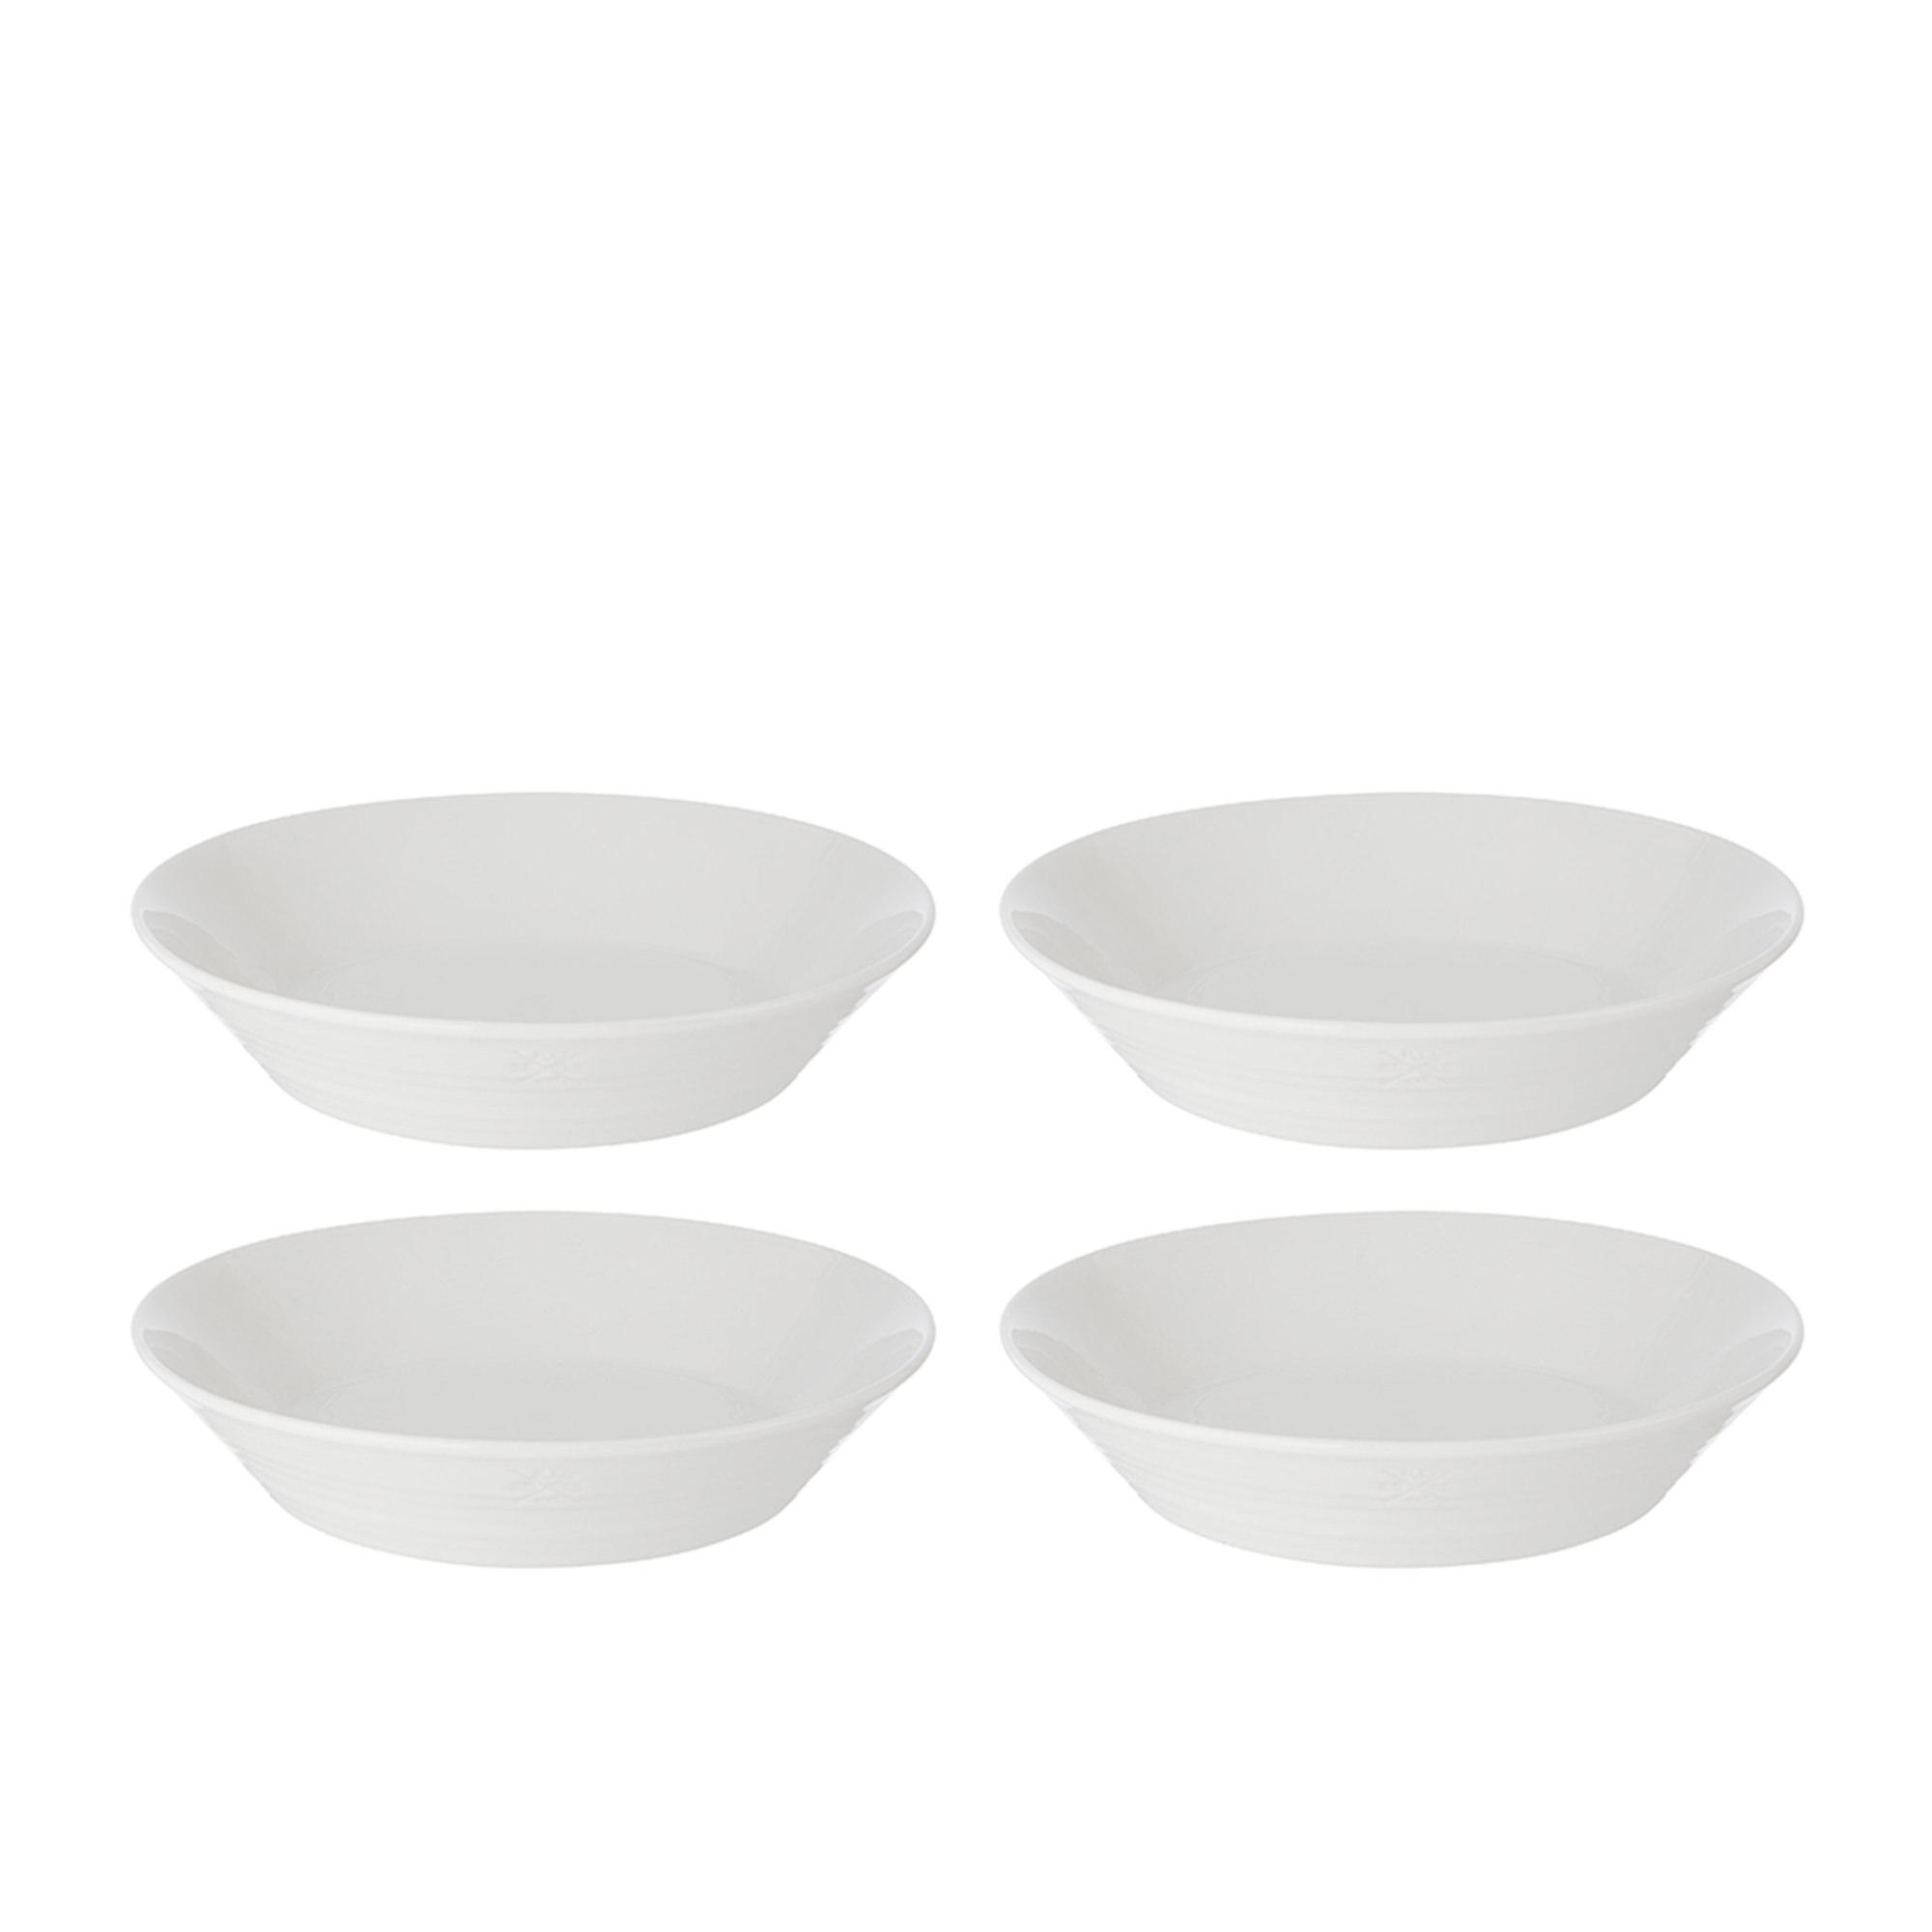 Royal Doulton 1815 Pure Pasta Bowl Set of 4 White Image 1